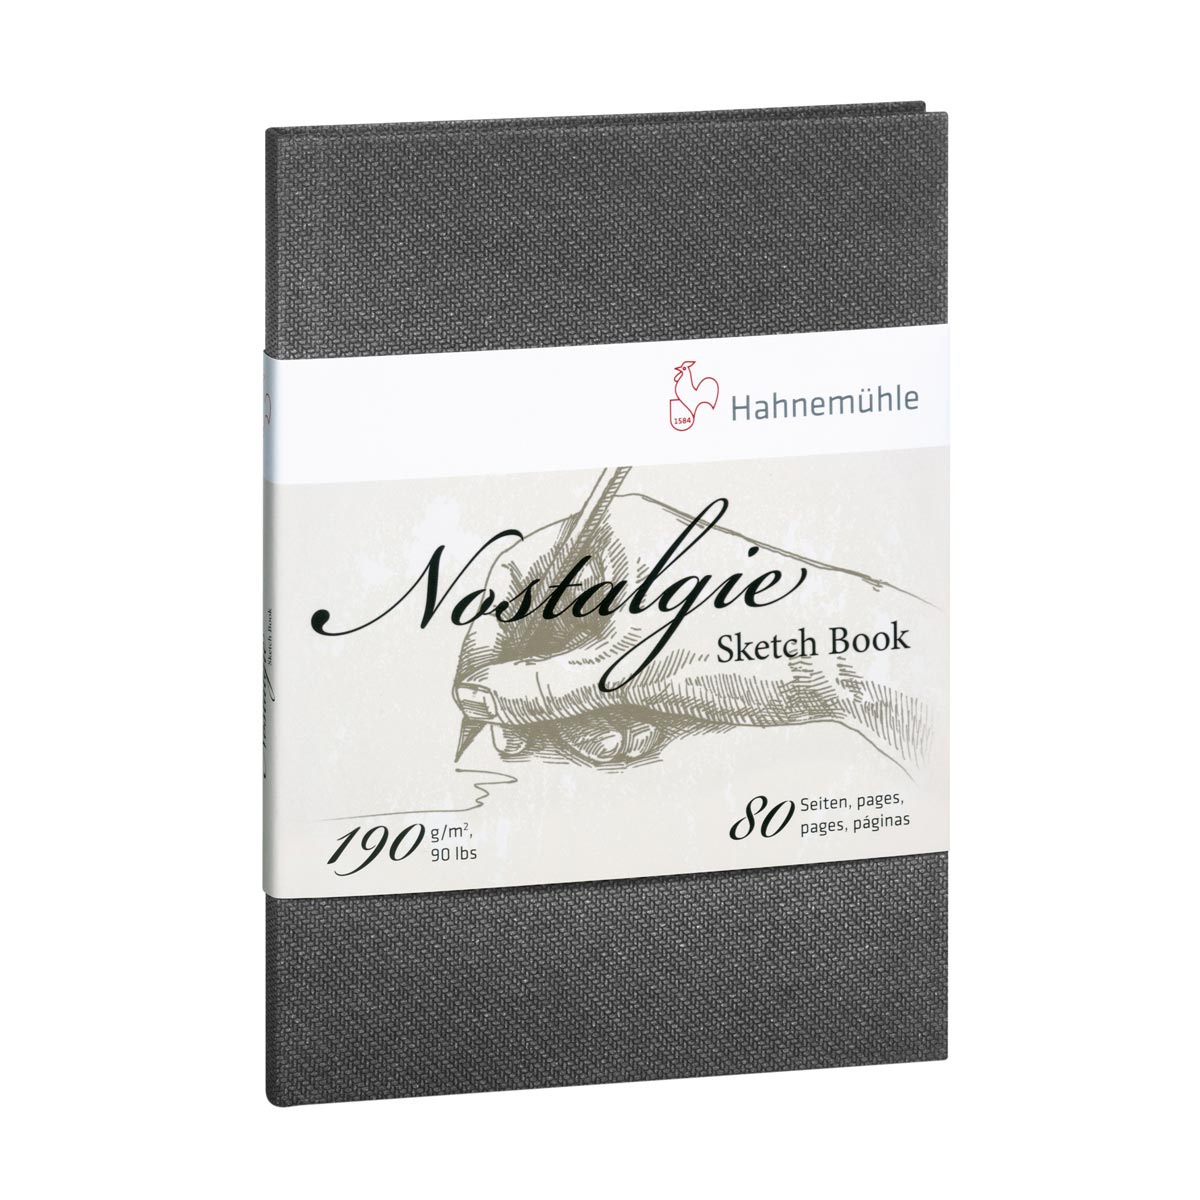 Hahnemuhle - Nostalgie Sketch Book - A5 190gsm - Portrait